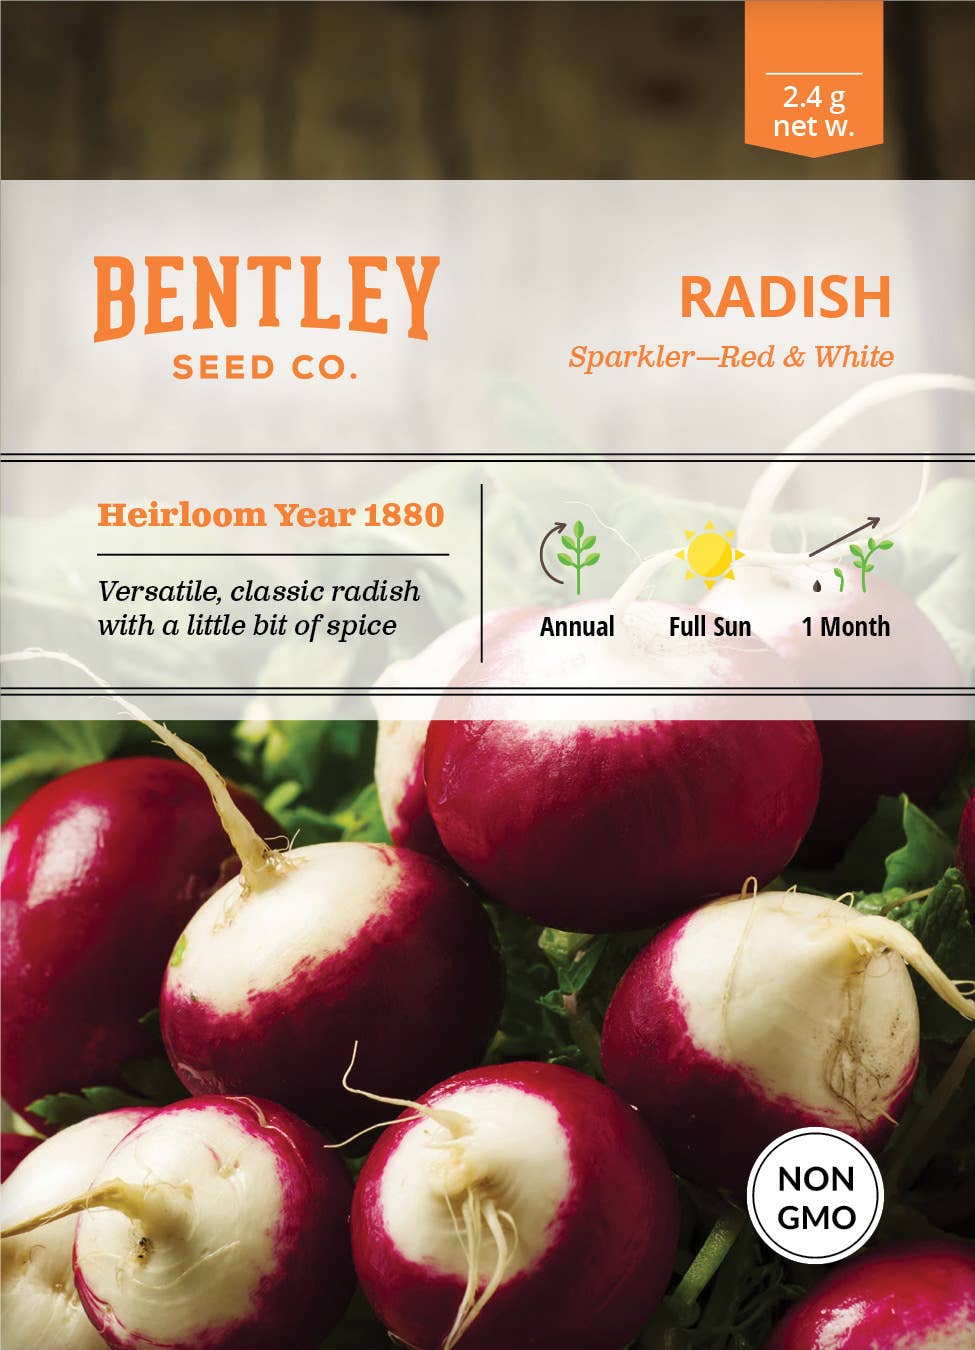 Bentley Seed Co. - Radish Sparkler